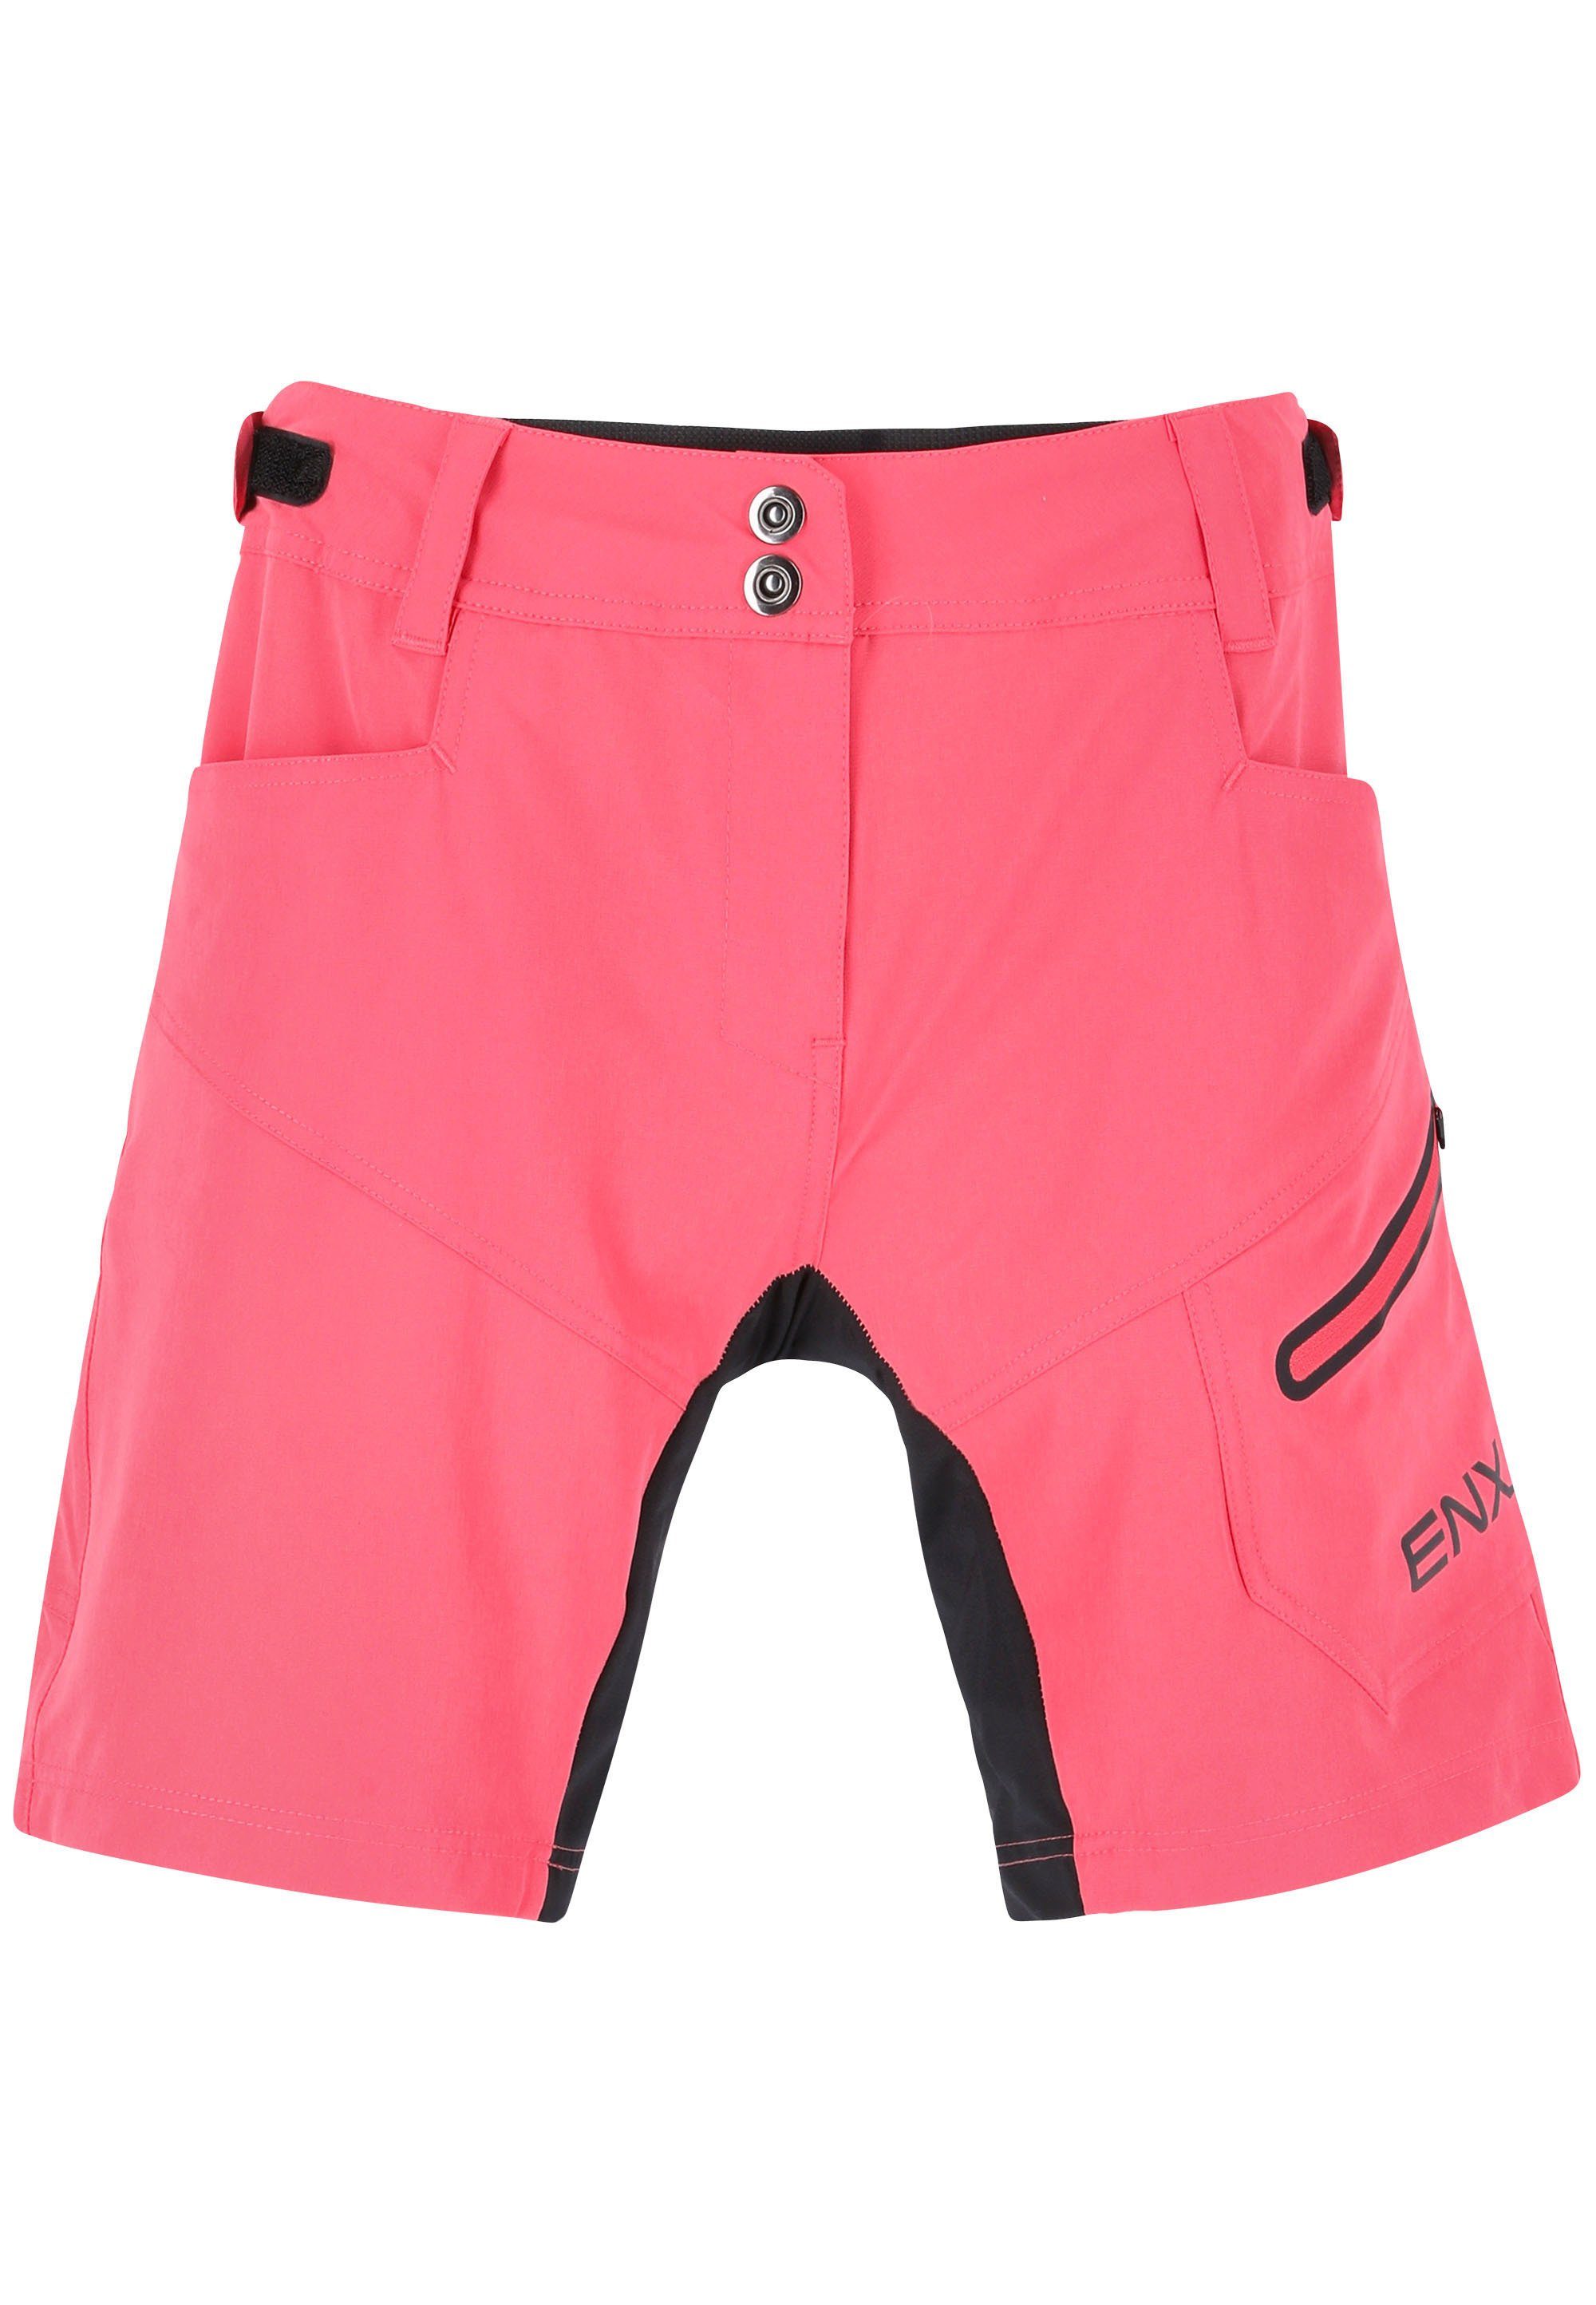 1 in rosa Radhose Jamilla Shorts W 2 Innen-Tights mit herausnehmbarer ENDURANCE